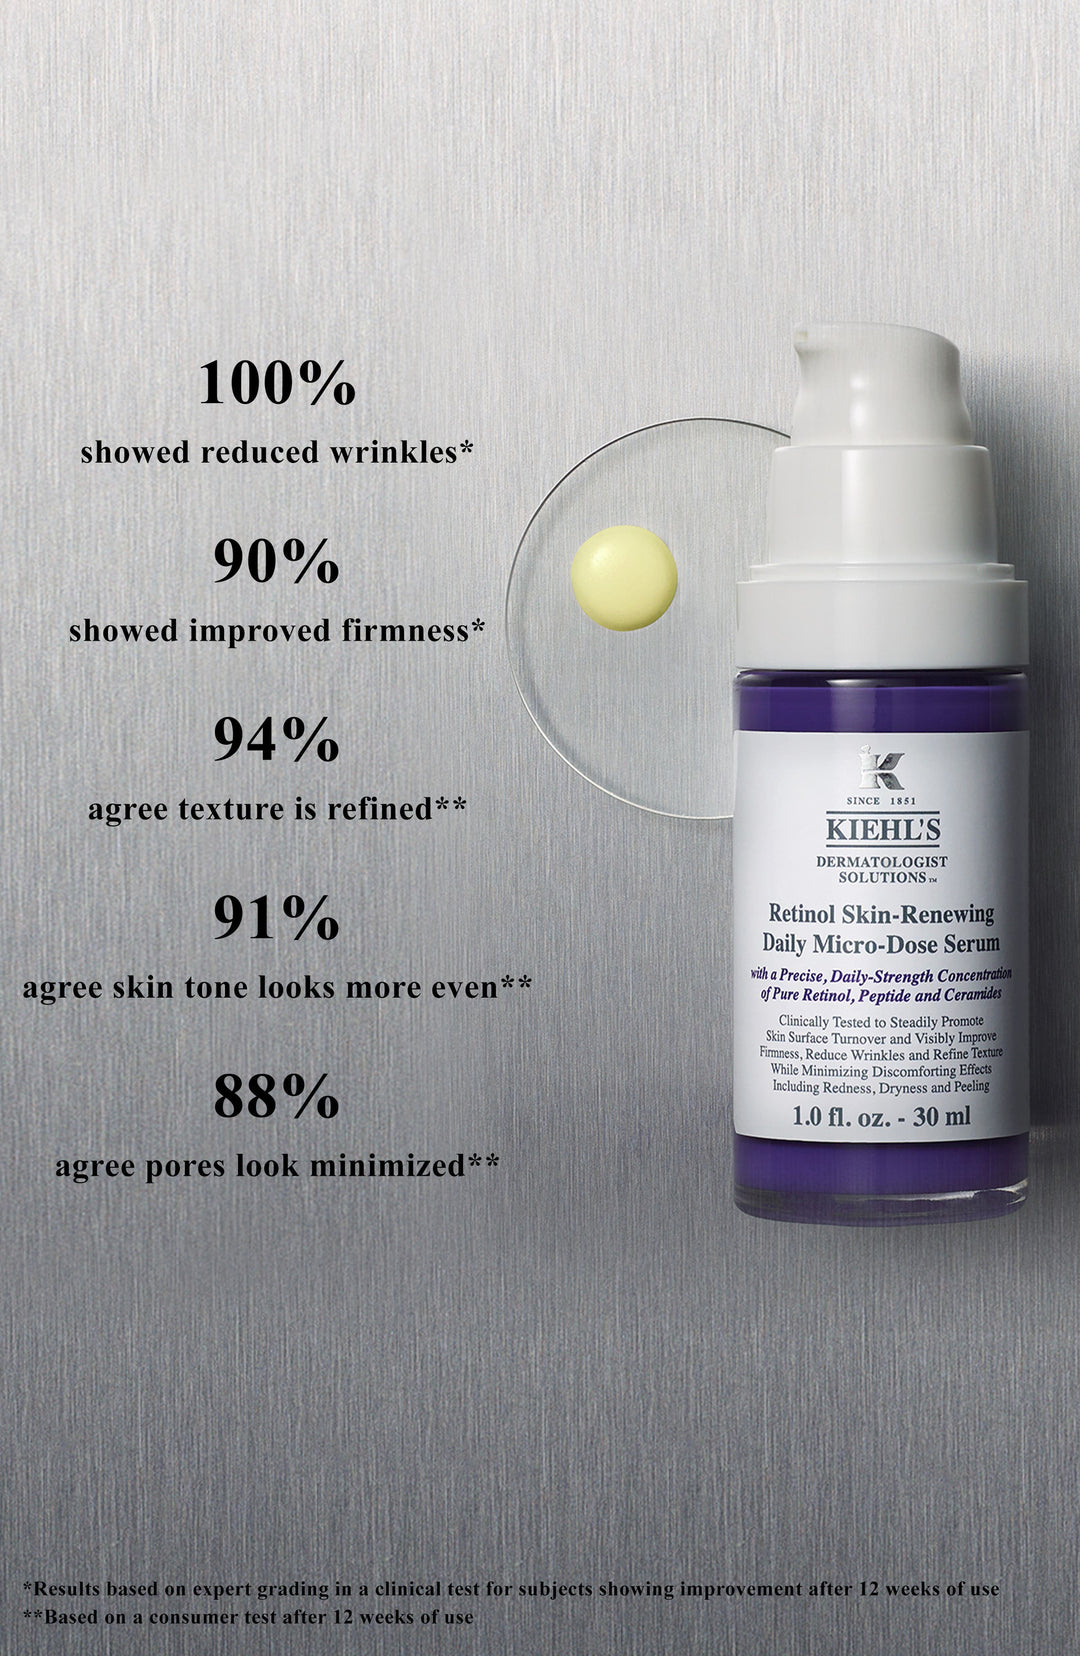 Kiehl's Since 1851 Retinol Skin Renewing Daily Micro Dose Serum